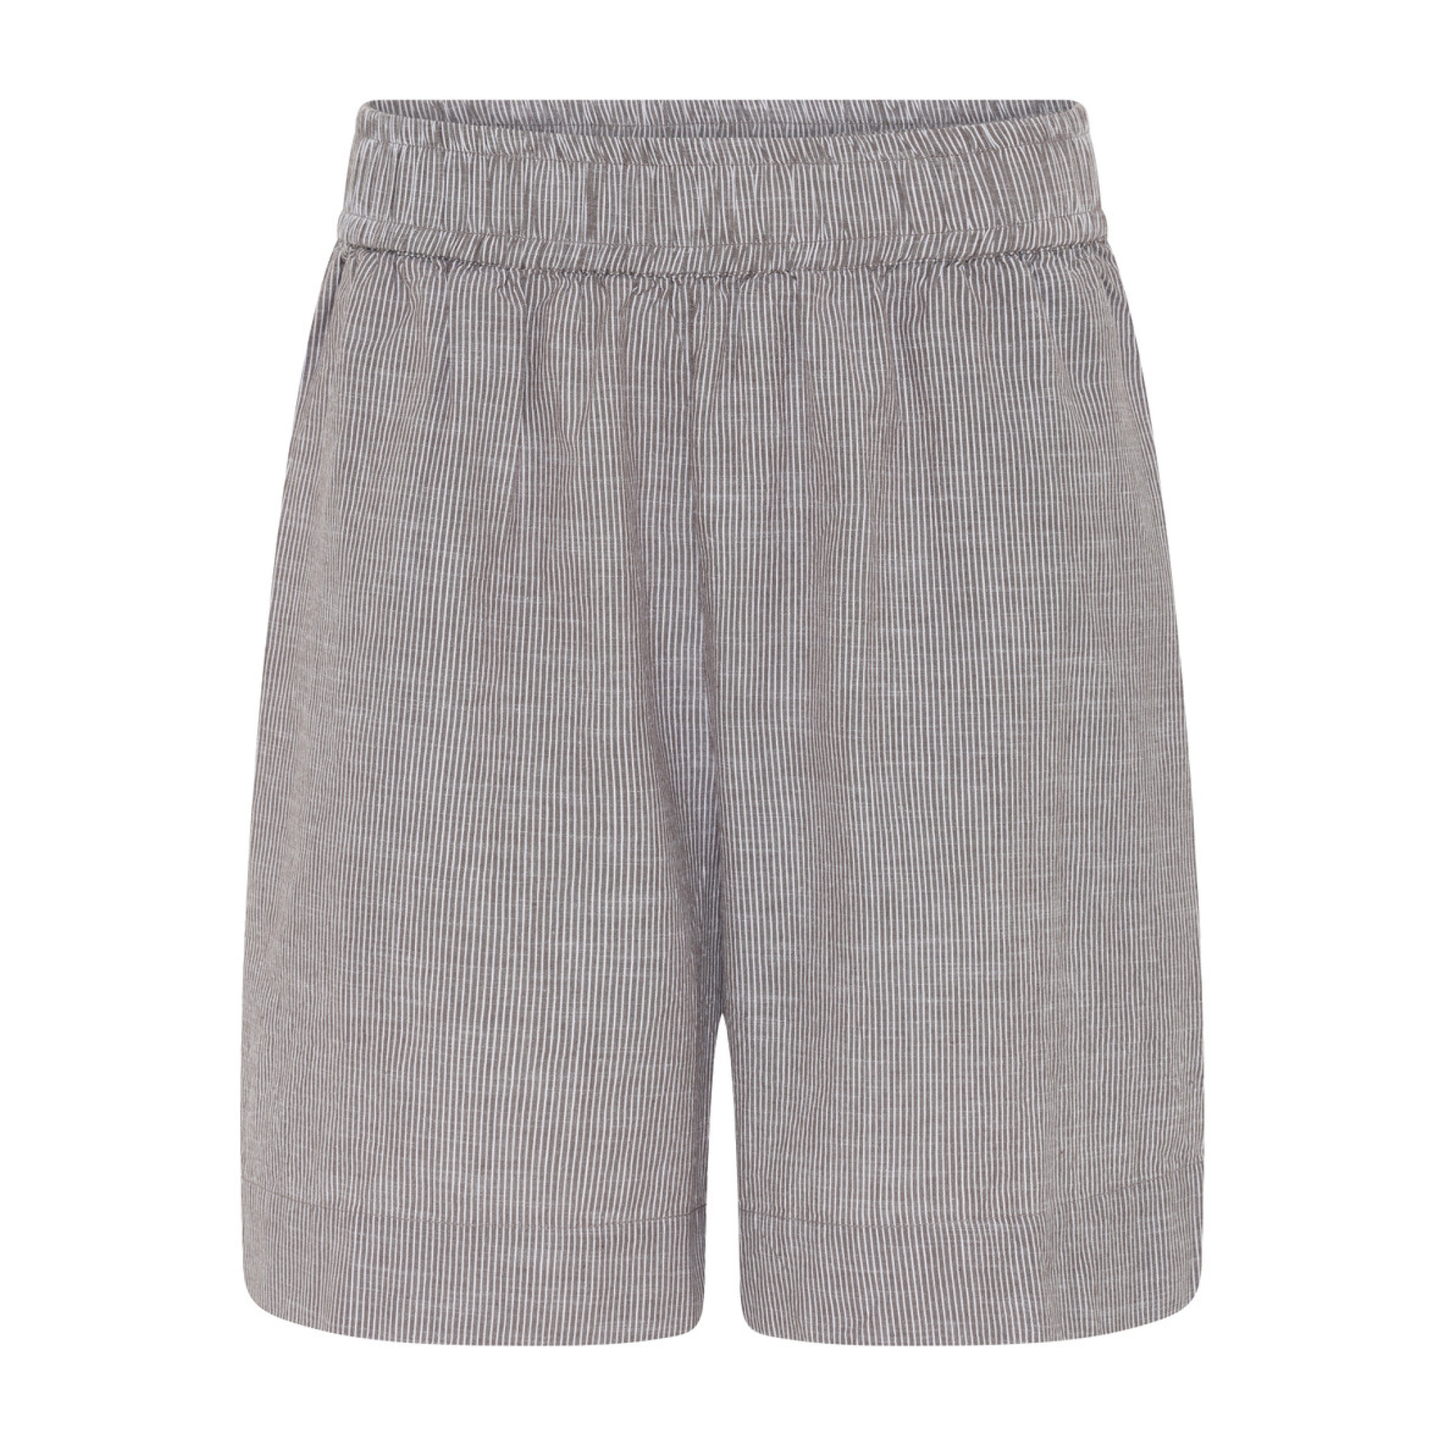 Sydney Shorts, Brown Stripe